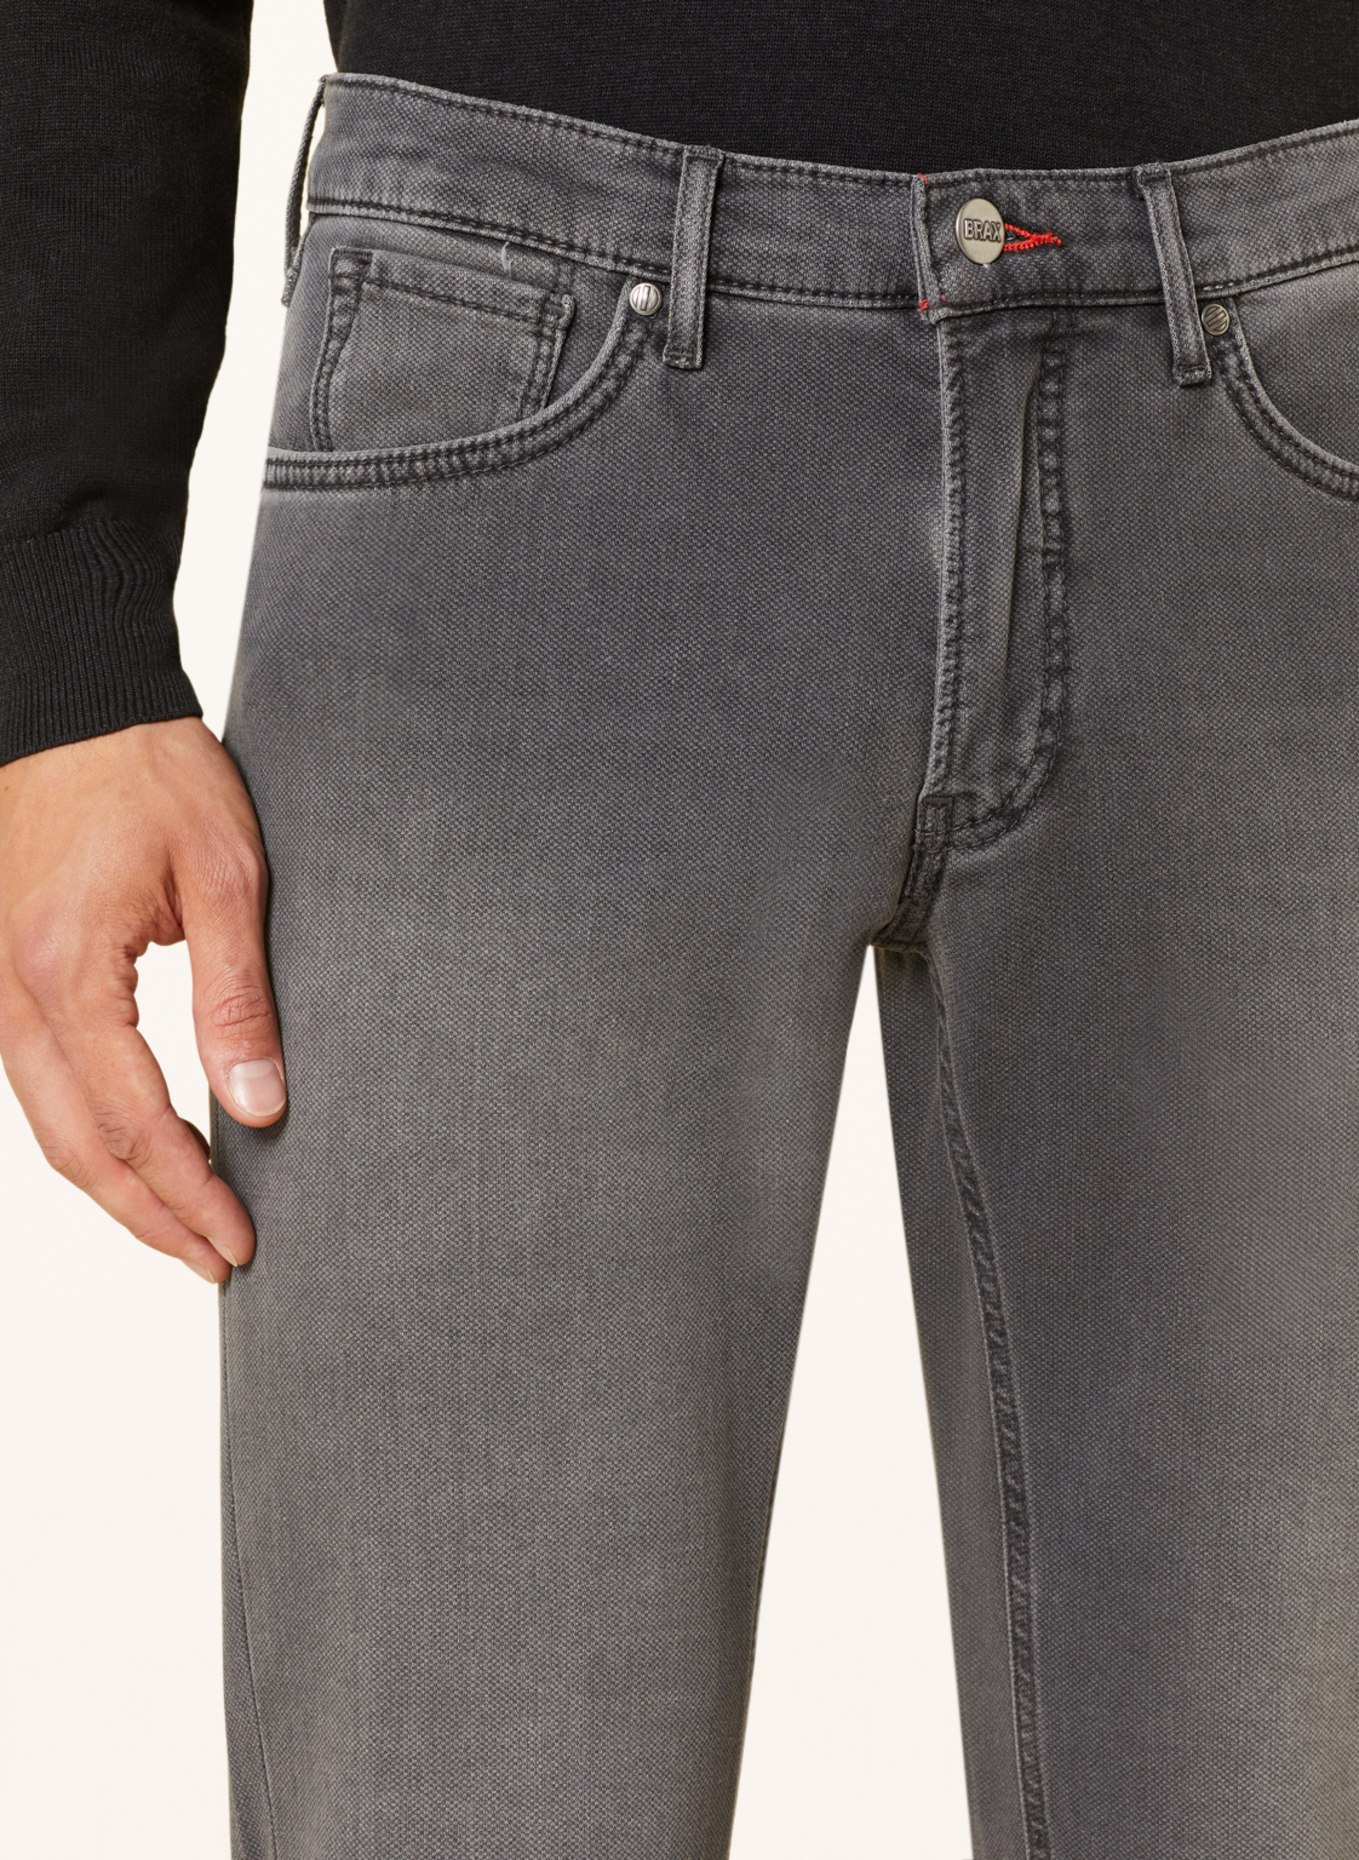 BRAX Jeans CHUCK Modern Fit 05 used grey slate in